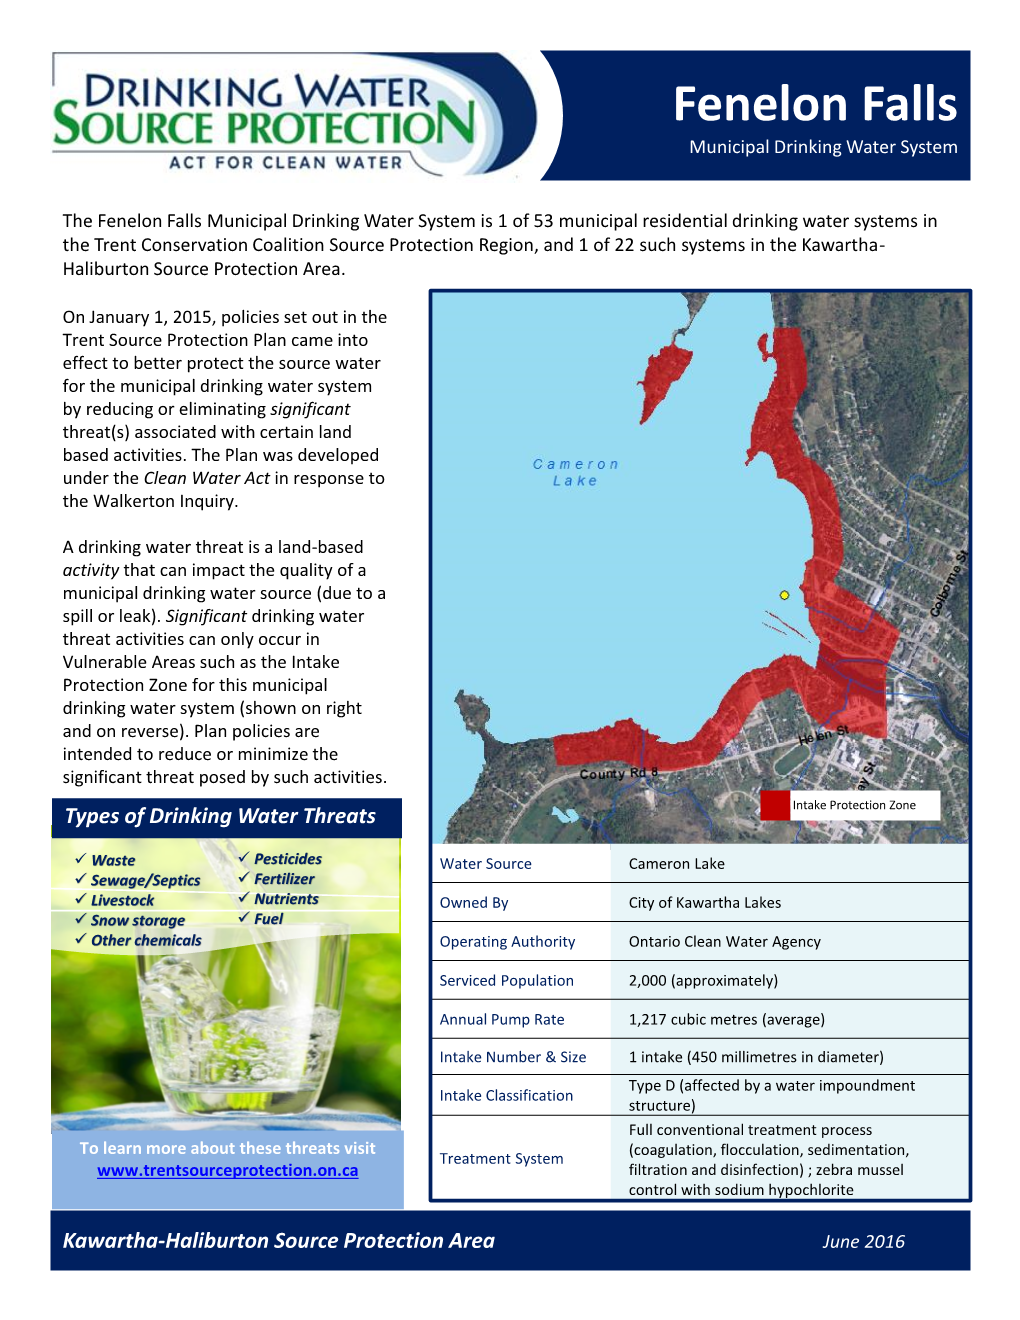 Fenelon Falls Municipal Drinking Water System